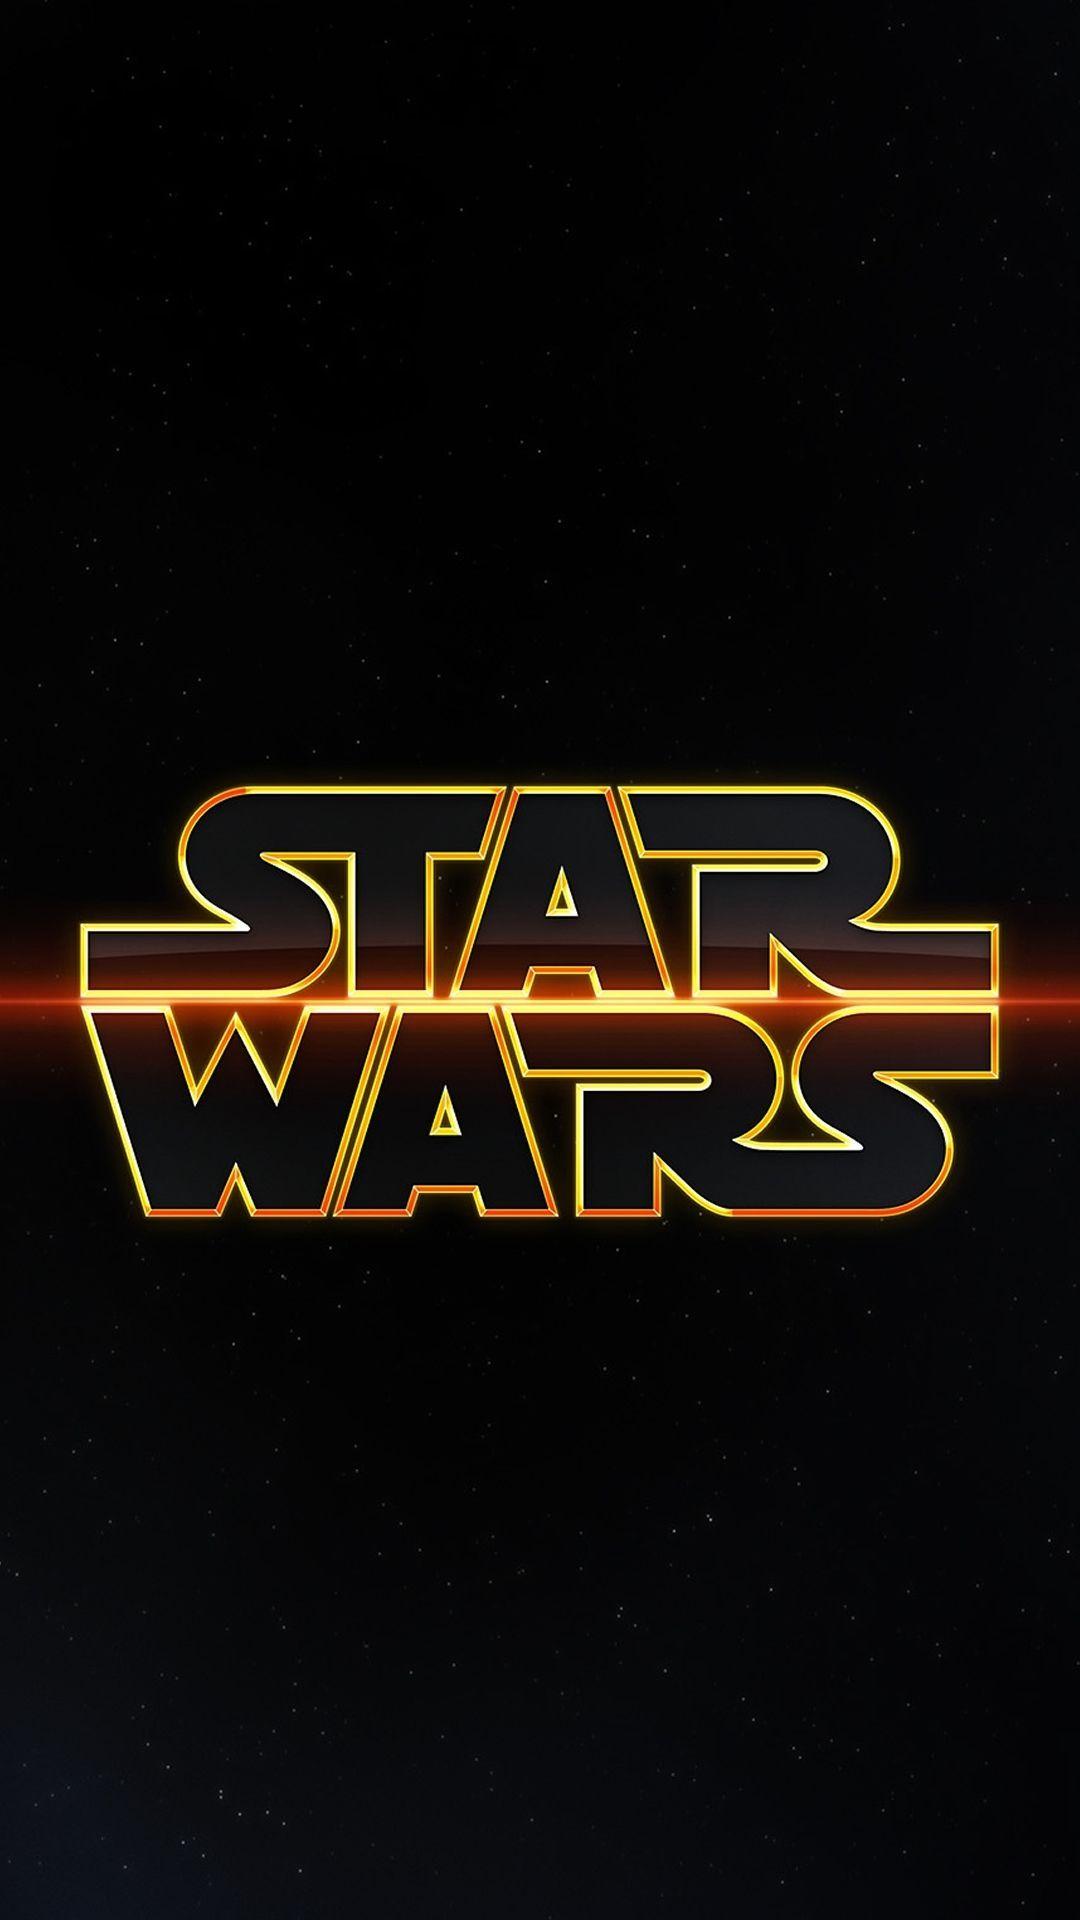 300 Star Wars Wallpaper for Desktop and Phones HD